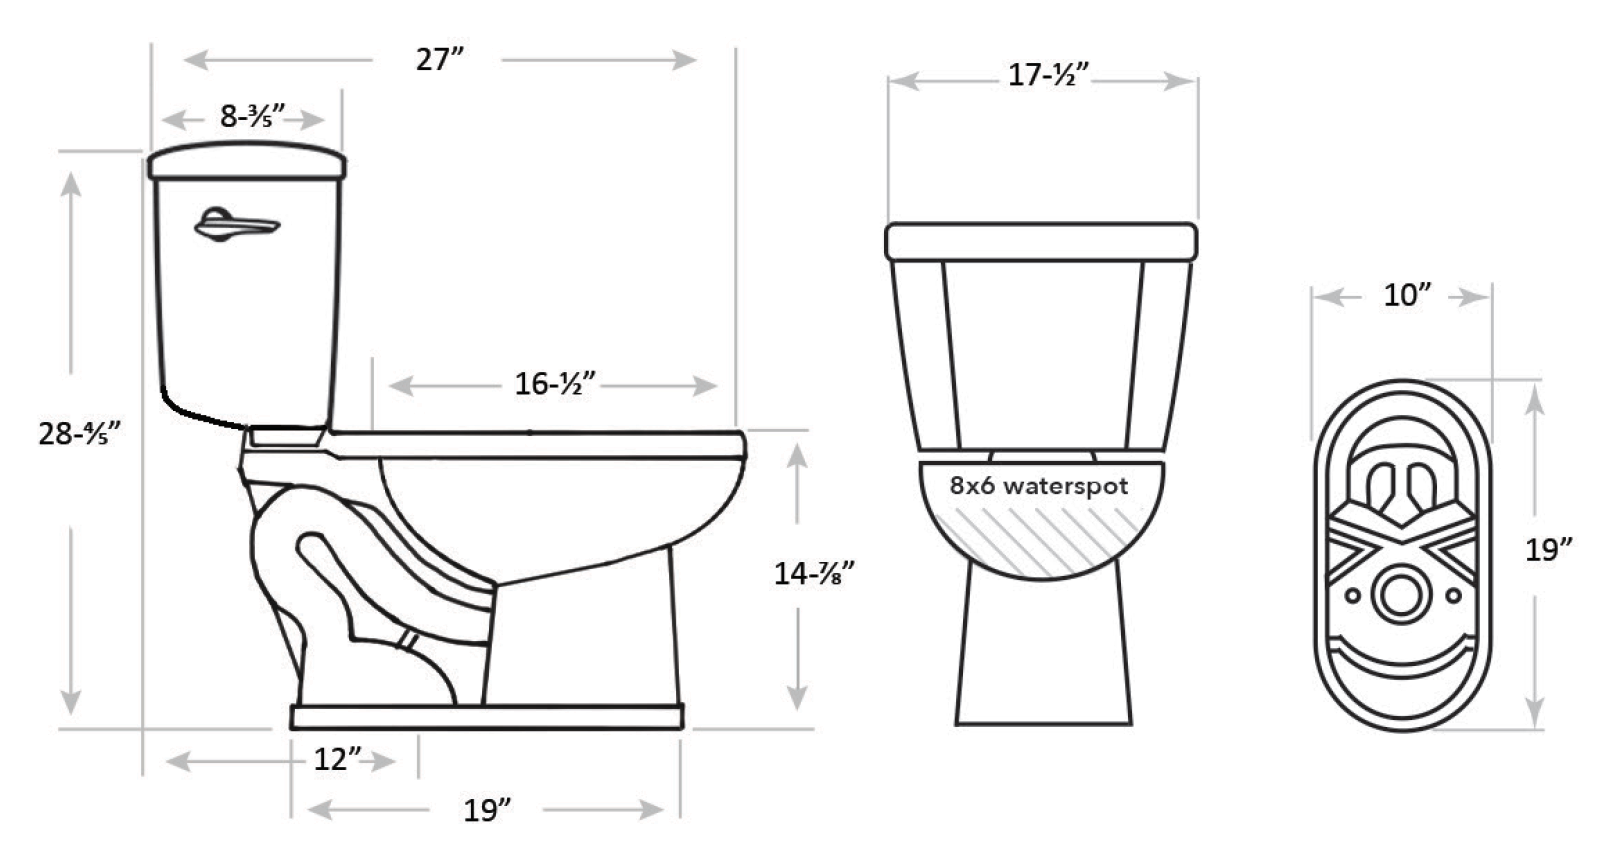 LIBERTY Round Toilet technical info